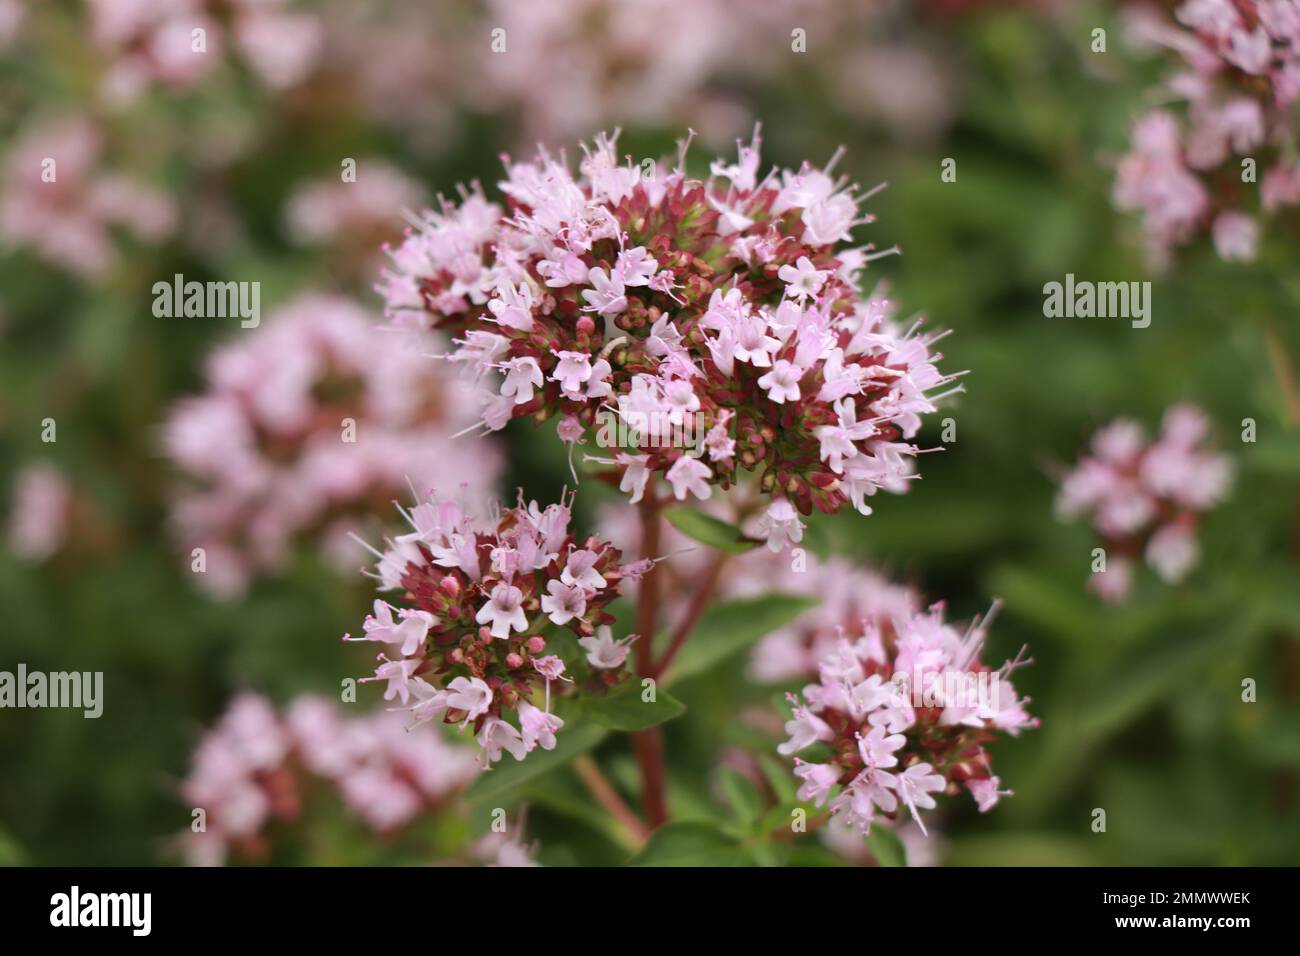 Herbs Origanum majorana in nature Stock Photo